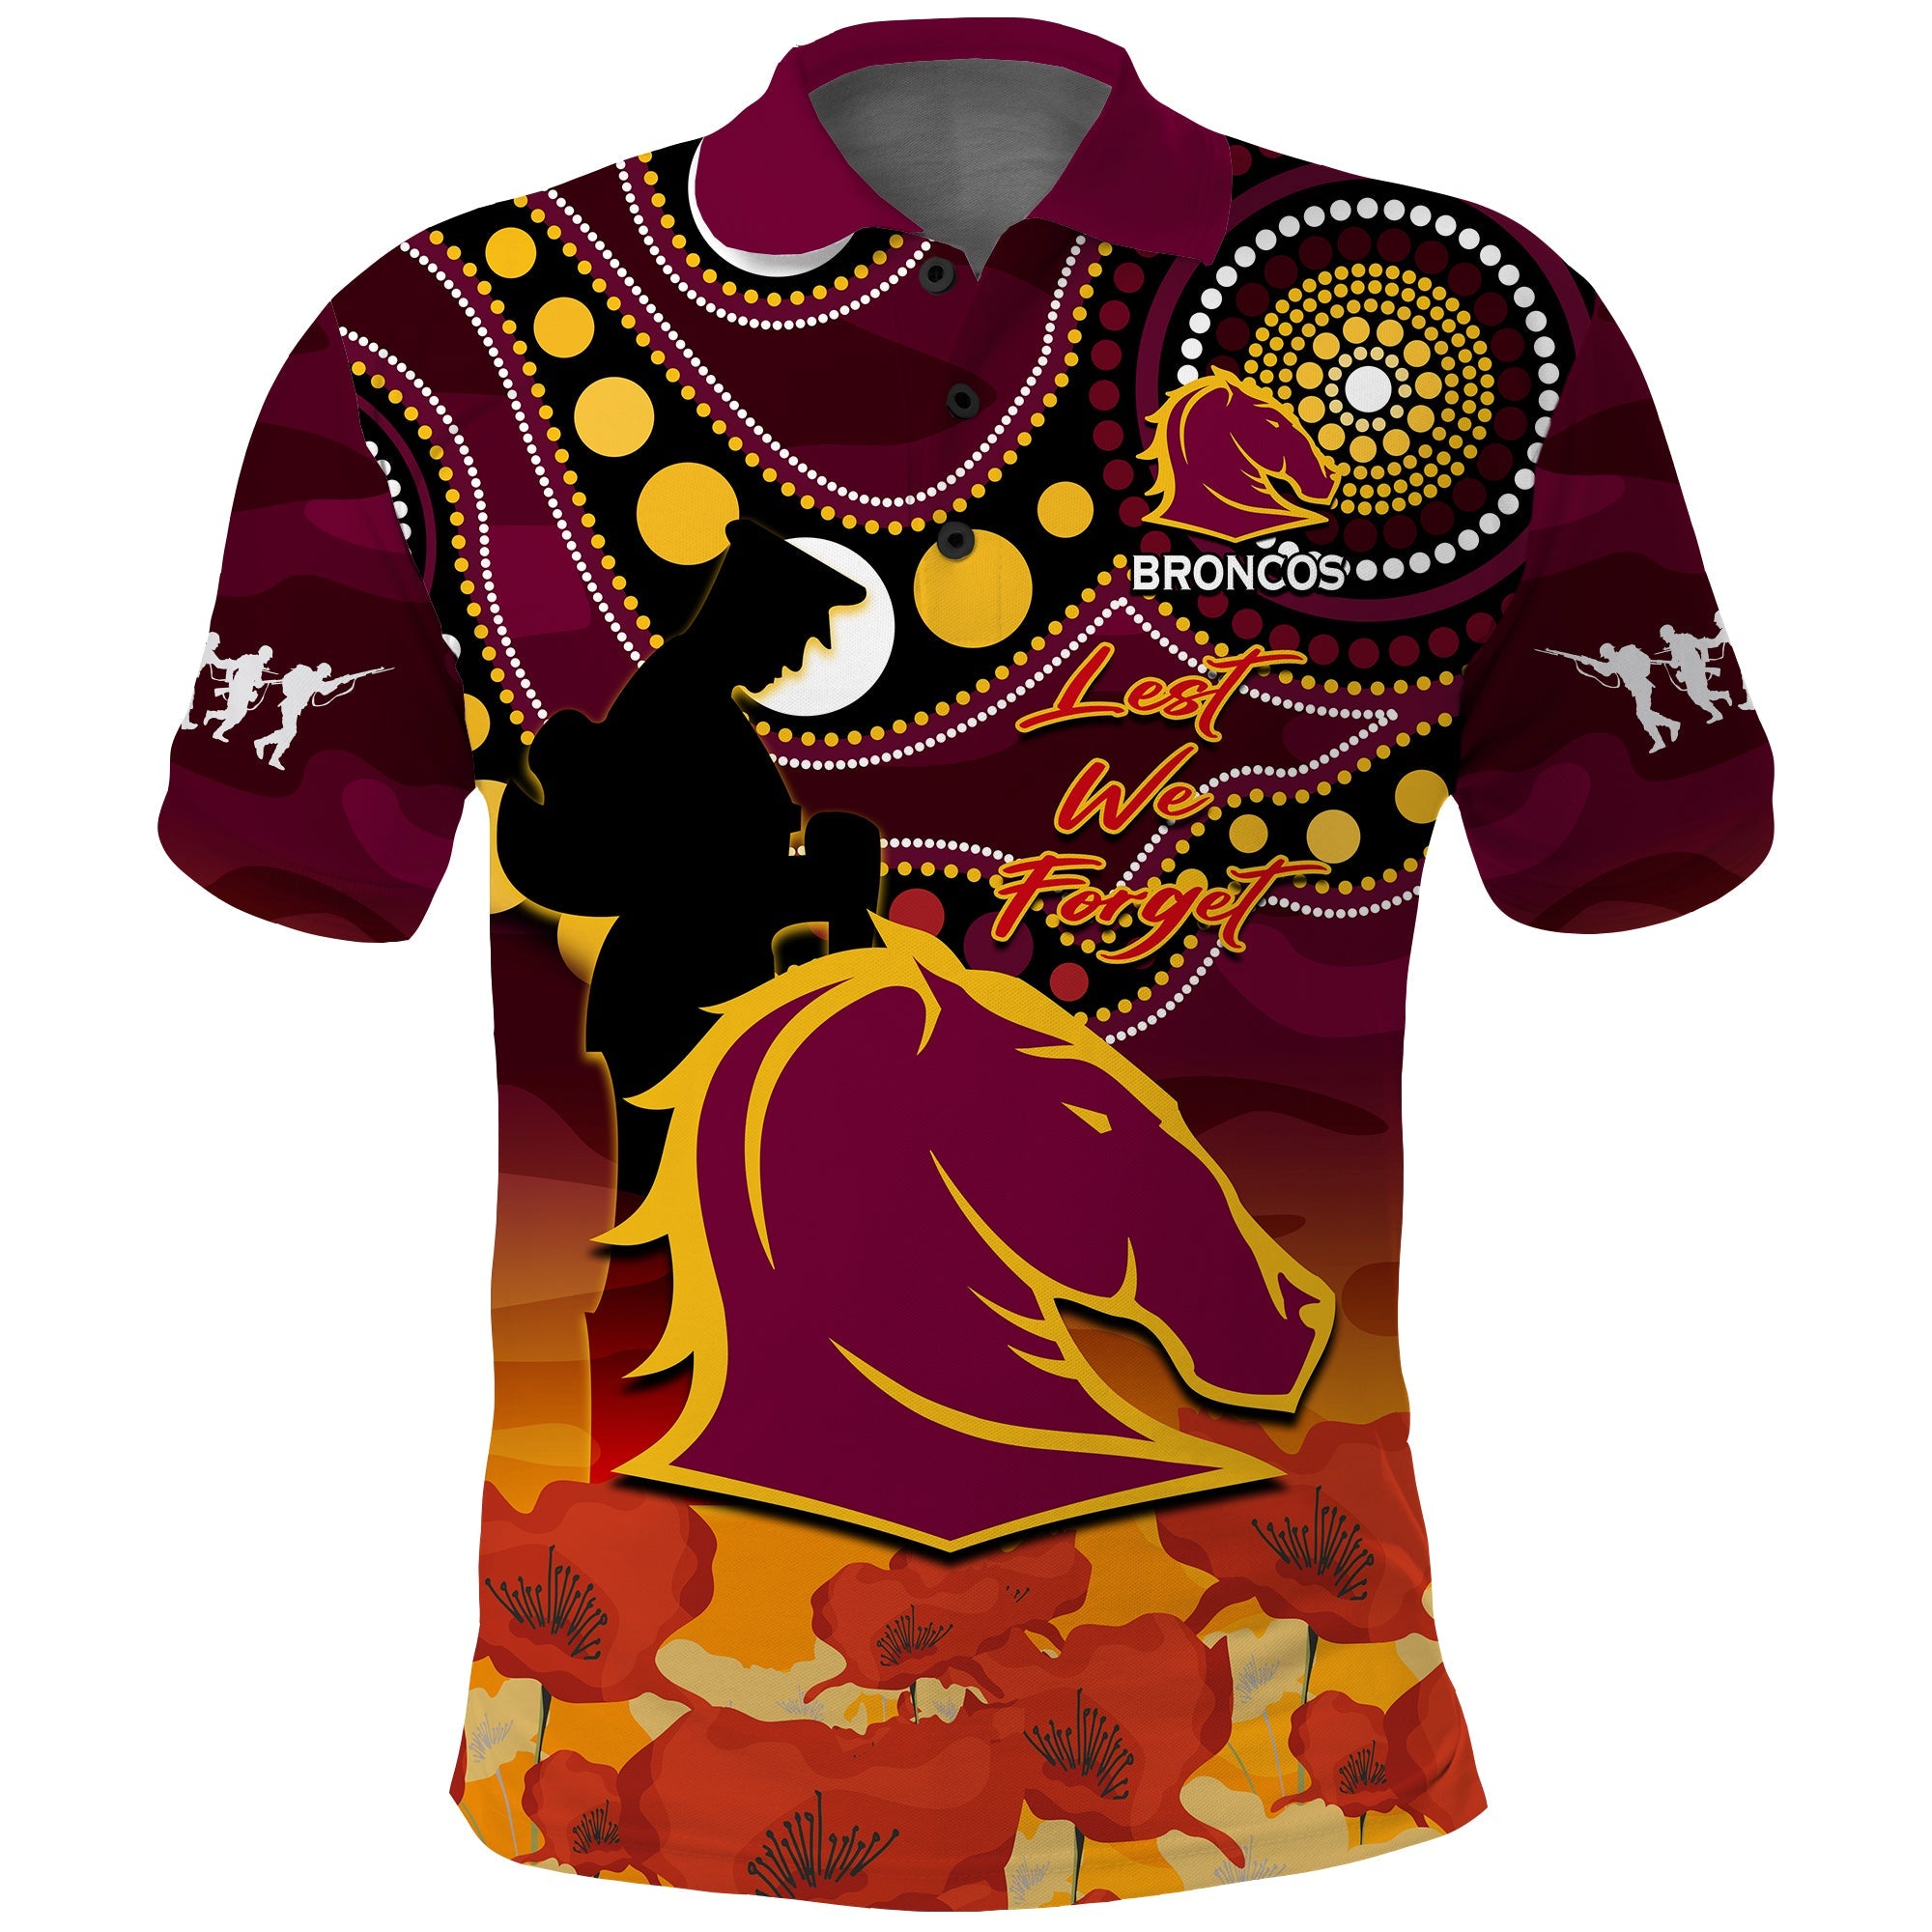 brisbane-broncos-rugby-anzac-2023-polo-shirt-aboriginal-mix-poppy-lest-we-forget